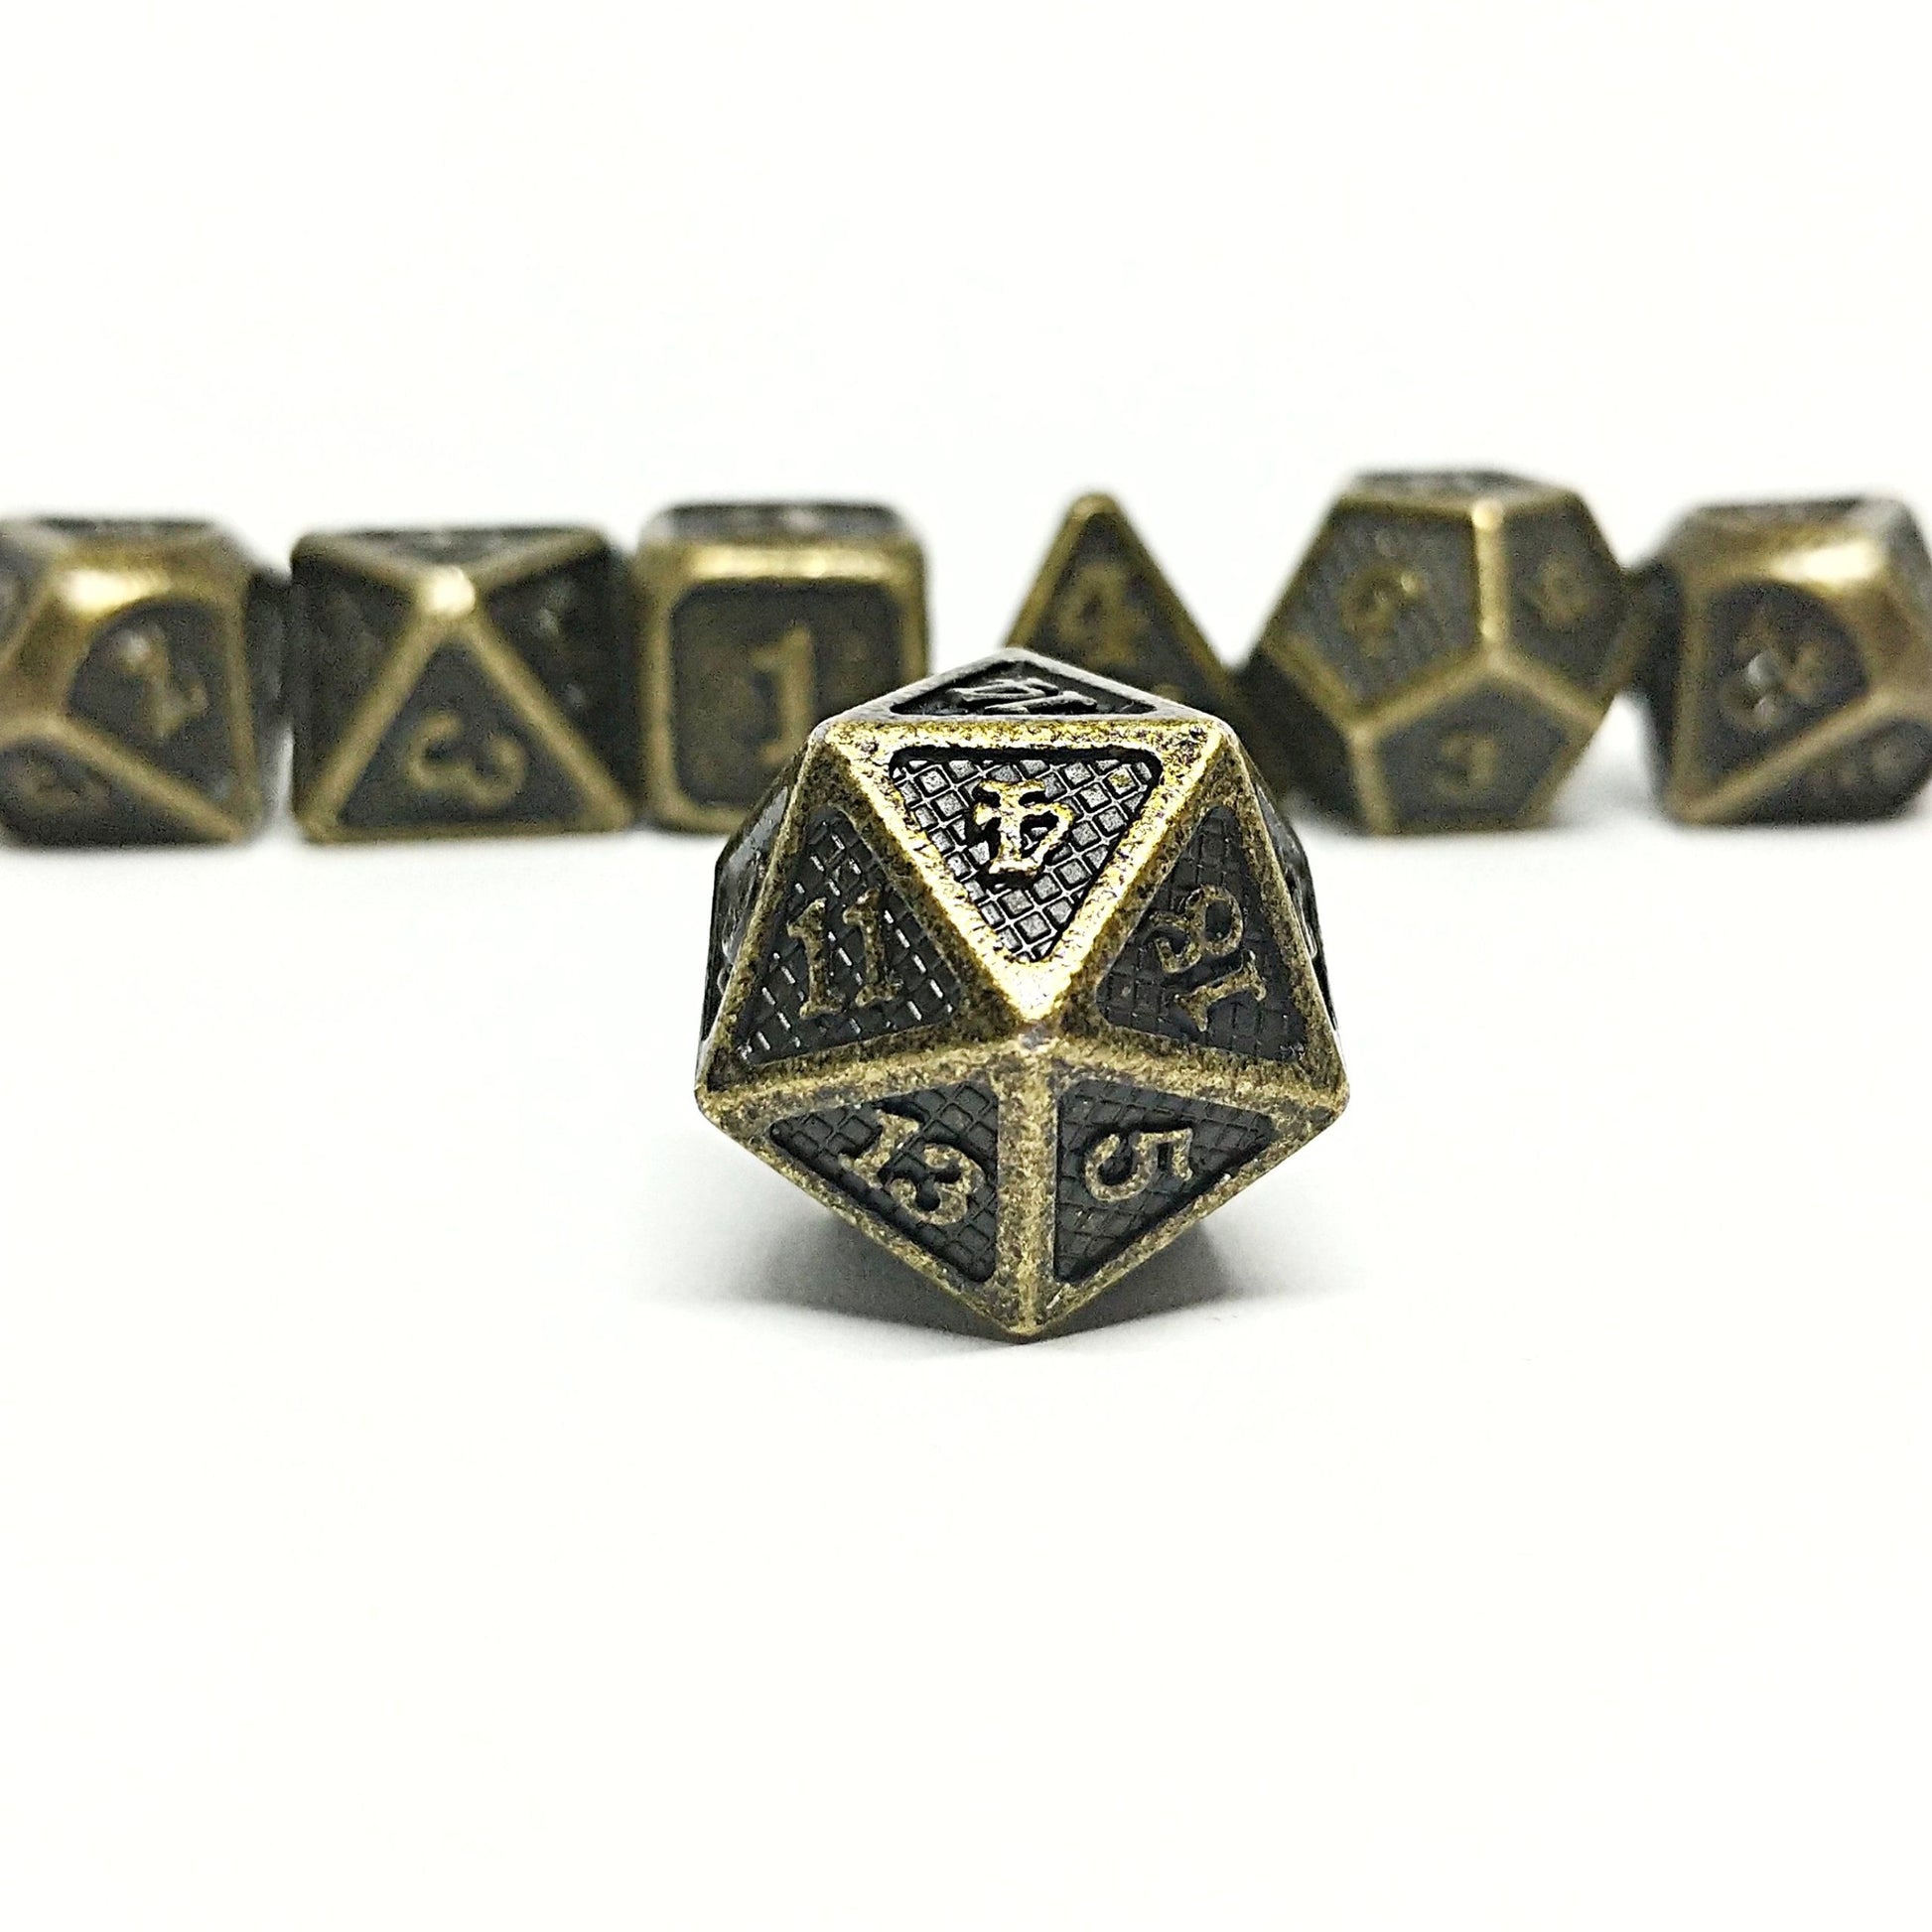 Dwarven Battlestone Polyhedral Dice Set - Arcana Vault